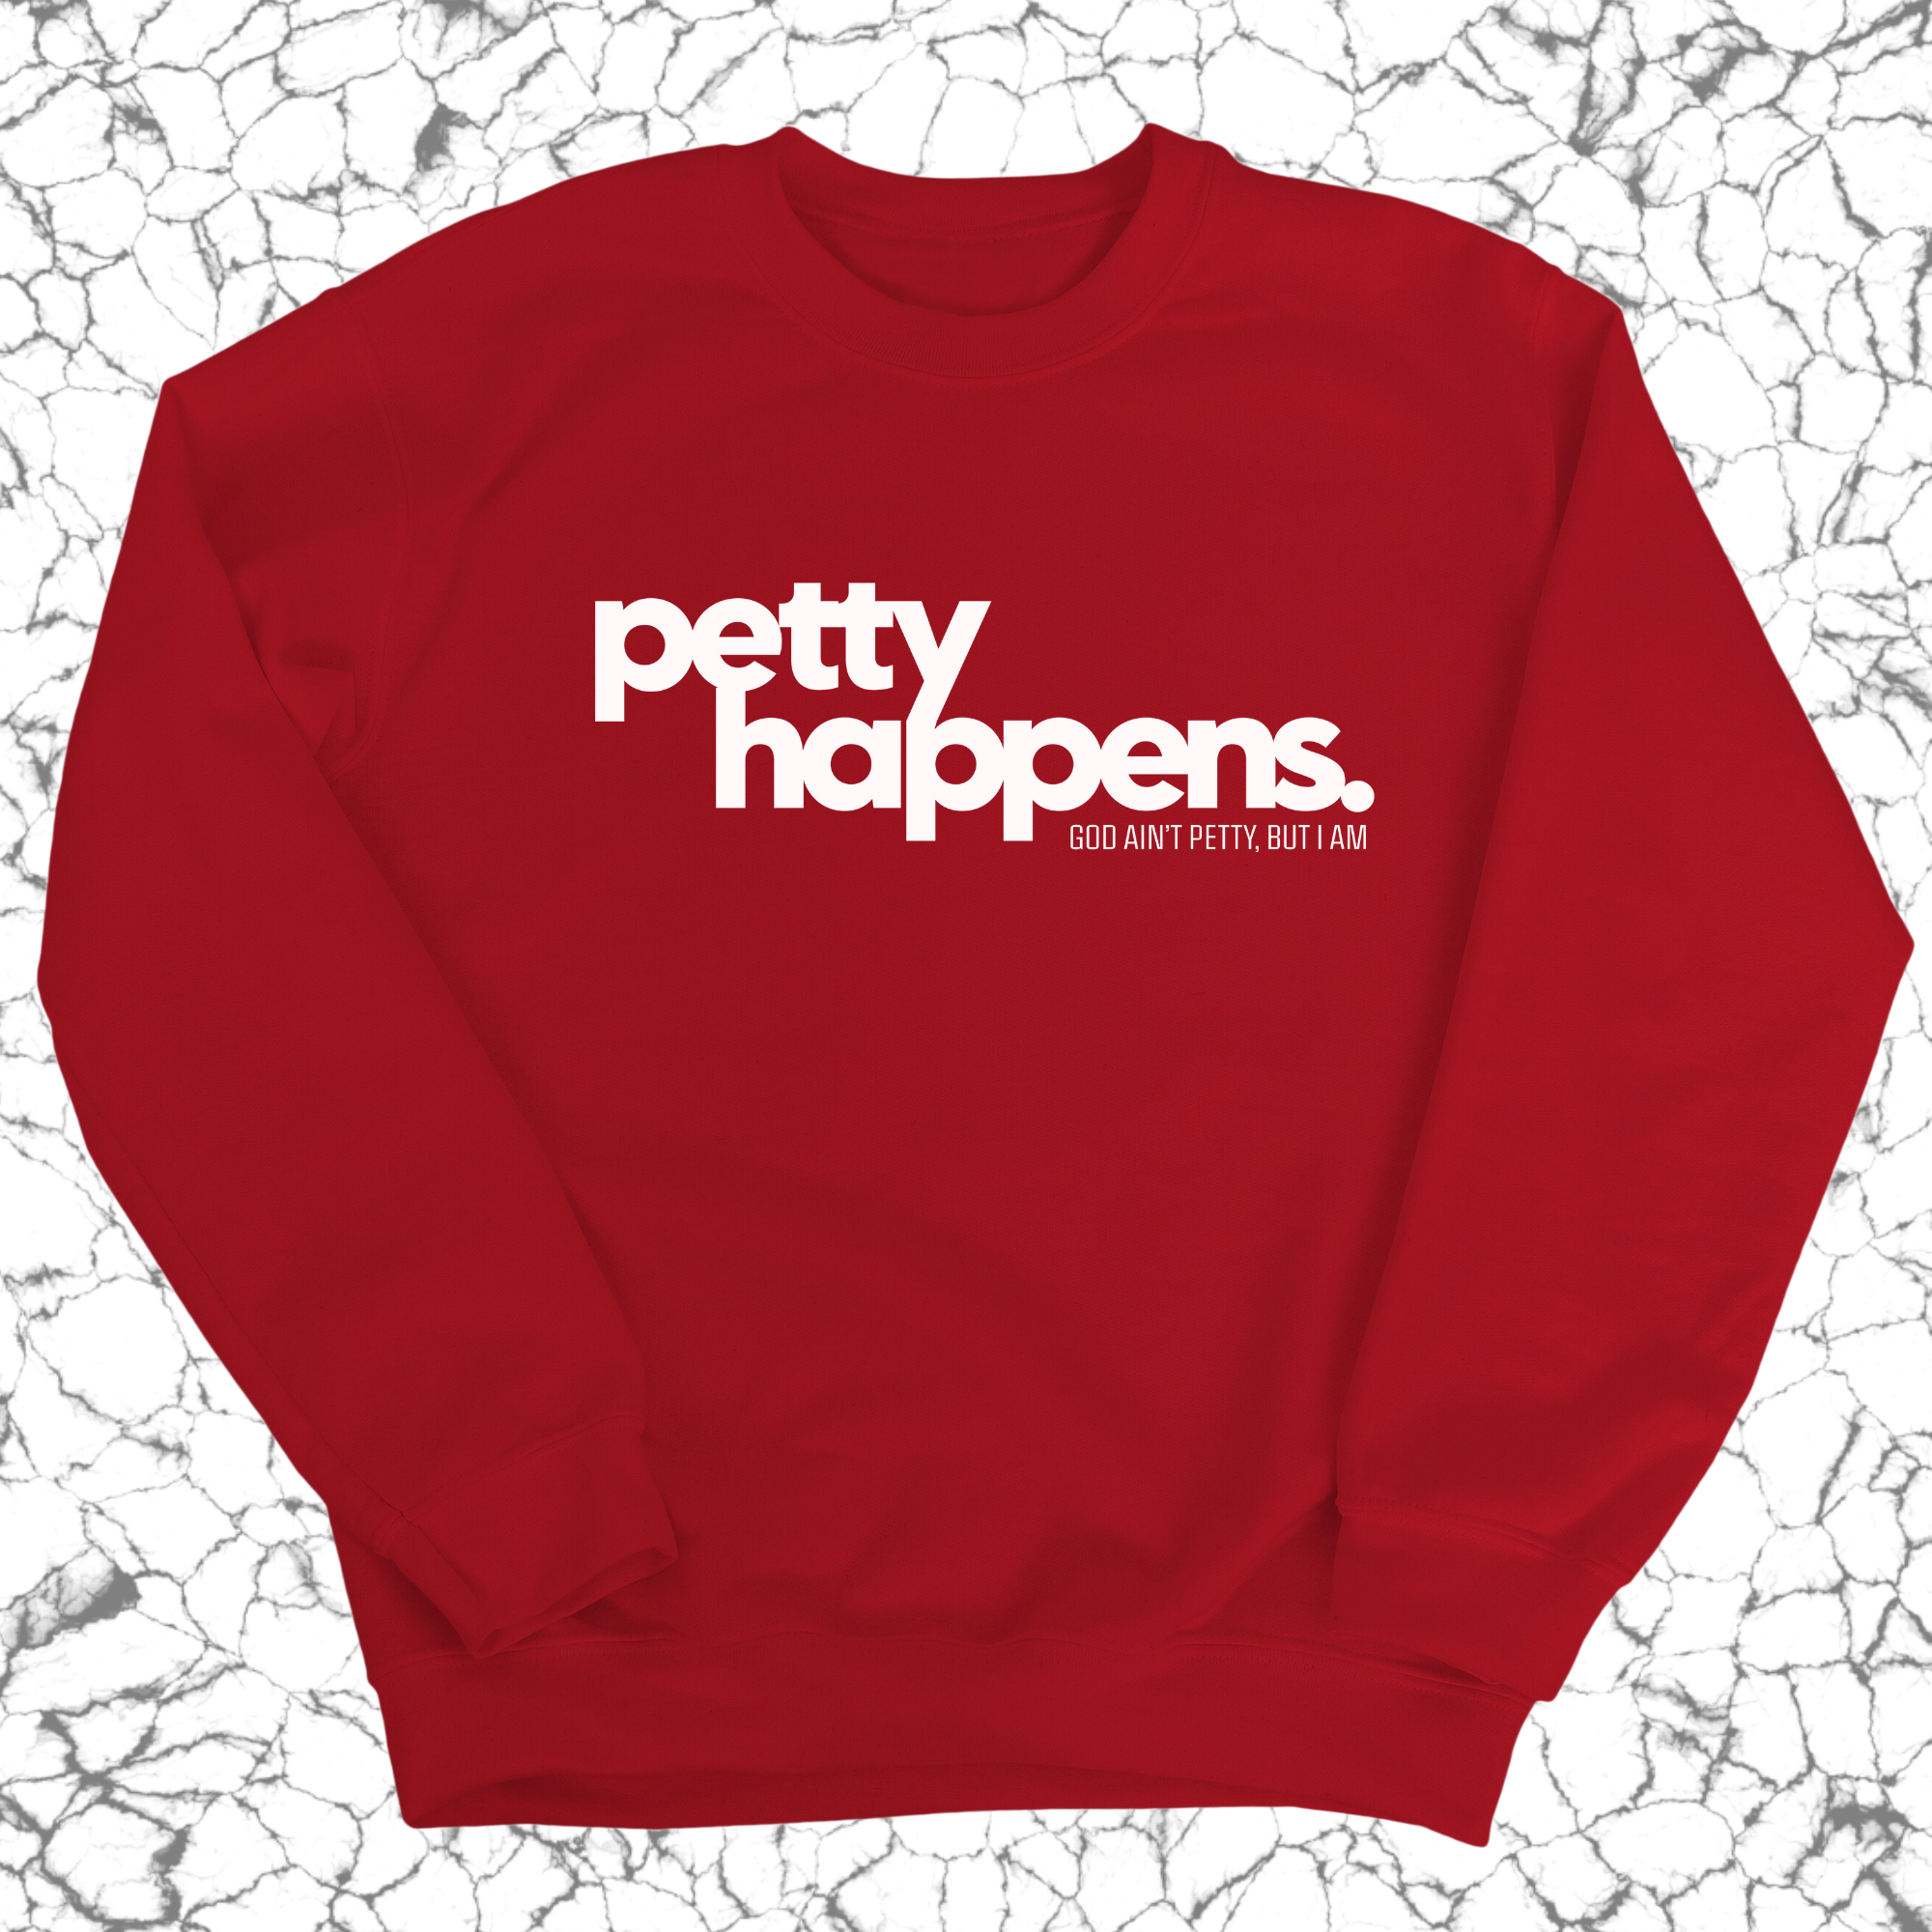 Petty Happens Unisex Sweatshirt-Sweatshirt-The Original God Ain't Petty But I Am